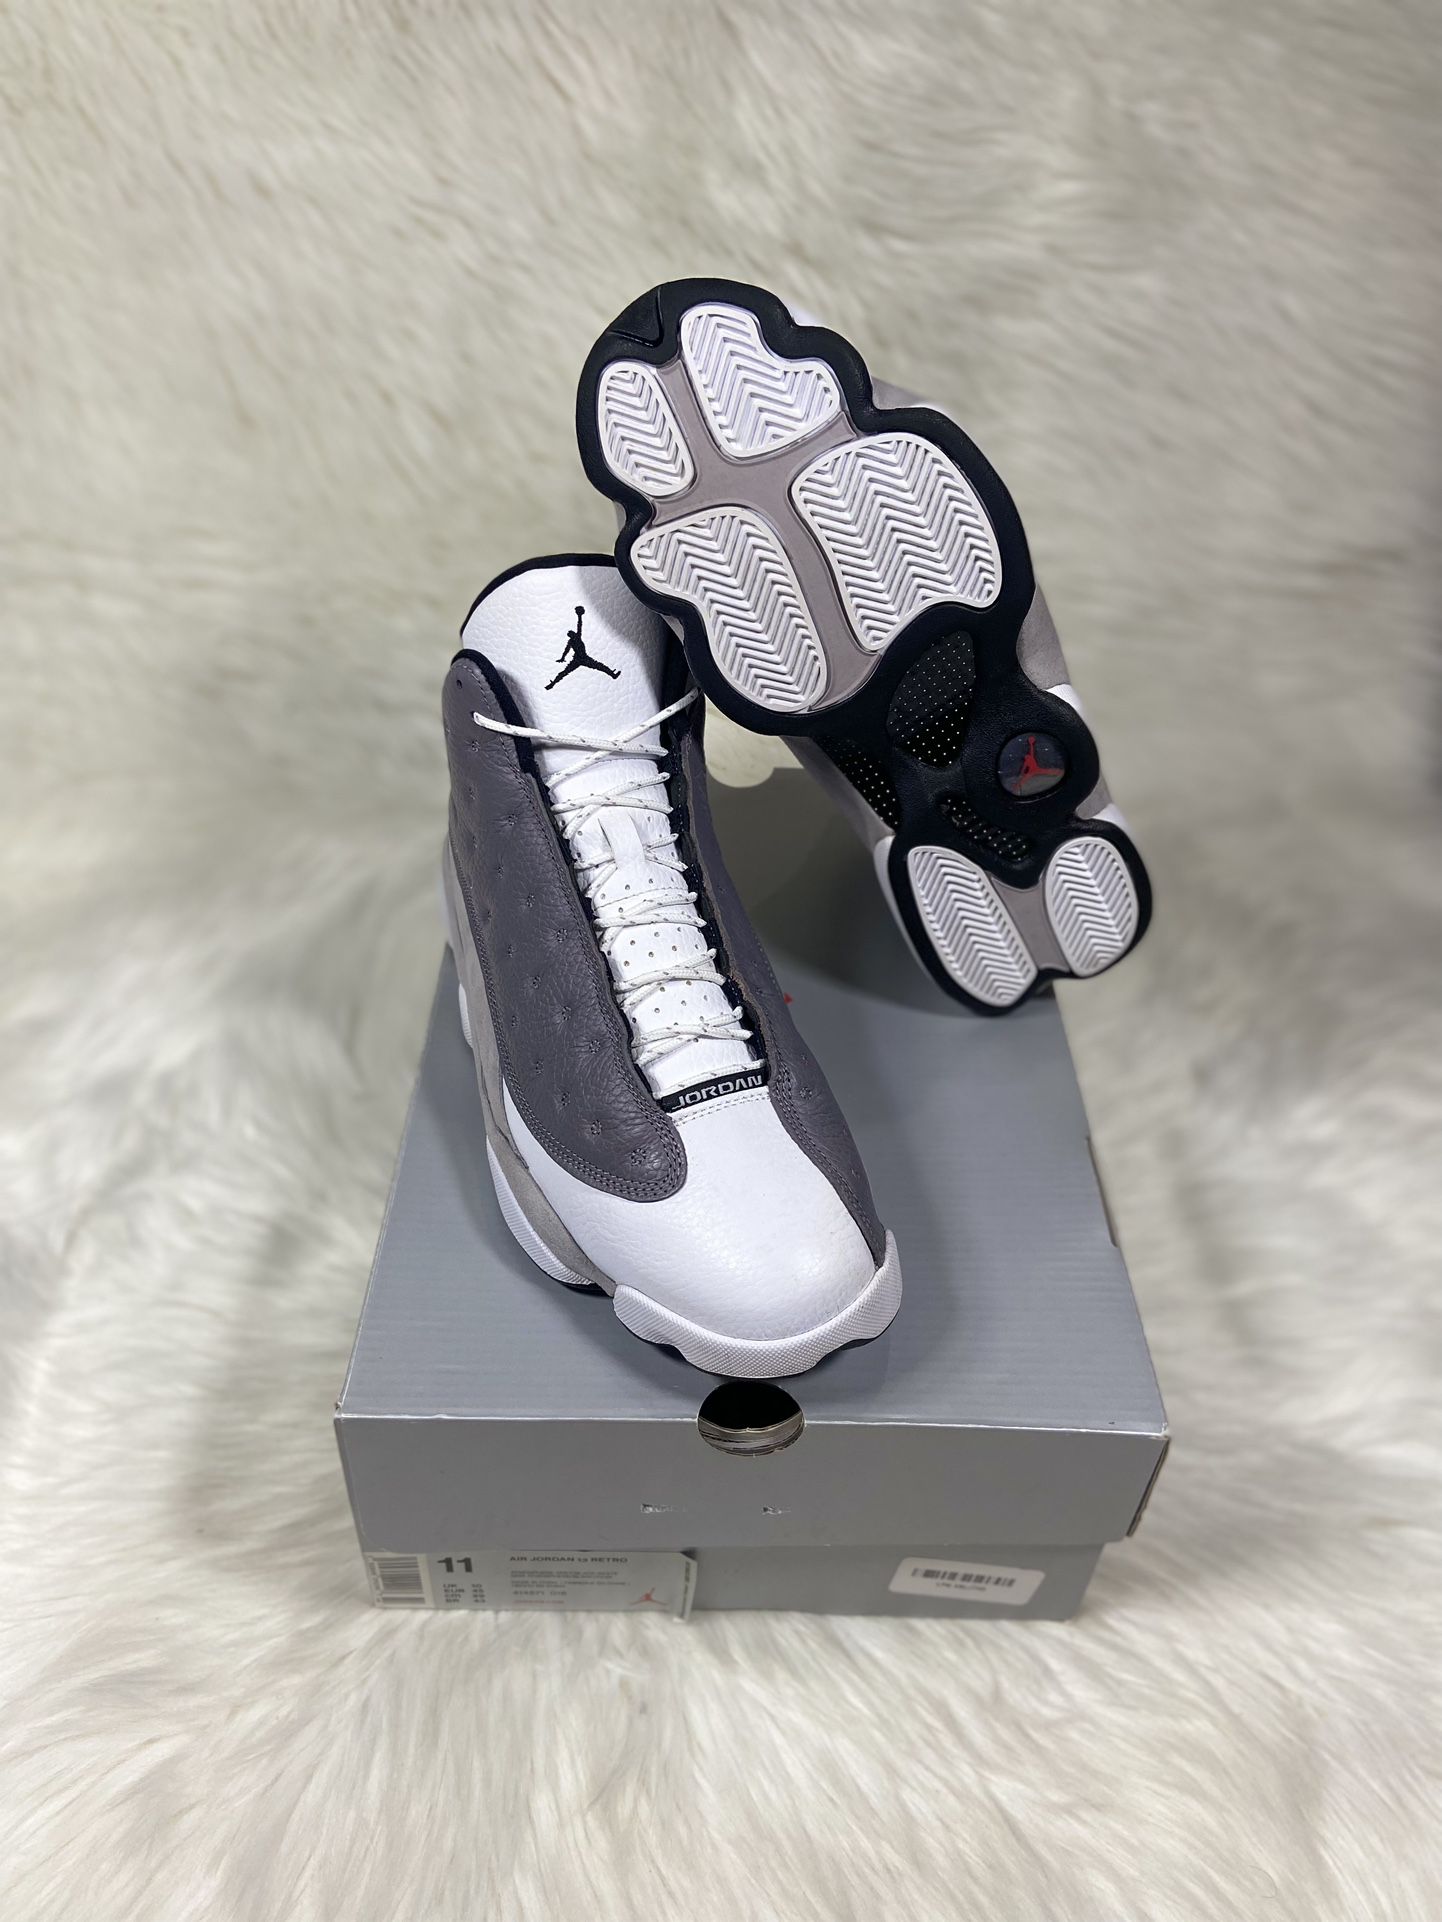 The Silver Air Jordan Box Is Coming Back with the Jordan 13 Retro